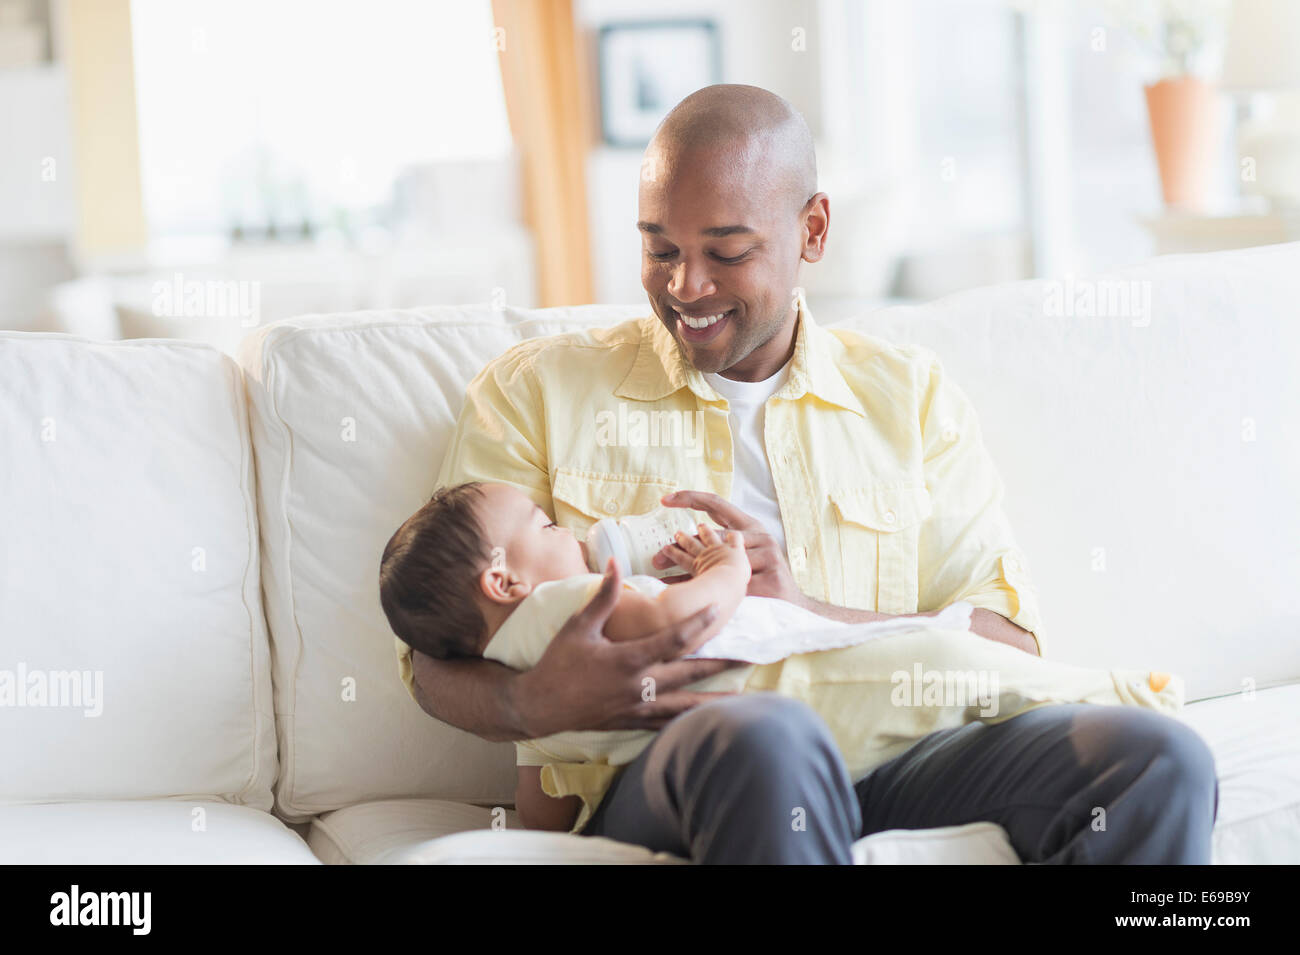 Smiling father feeding baby on sofa Stock Photo